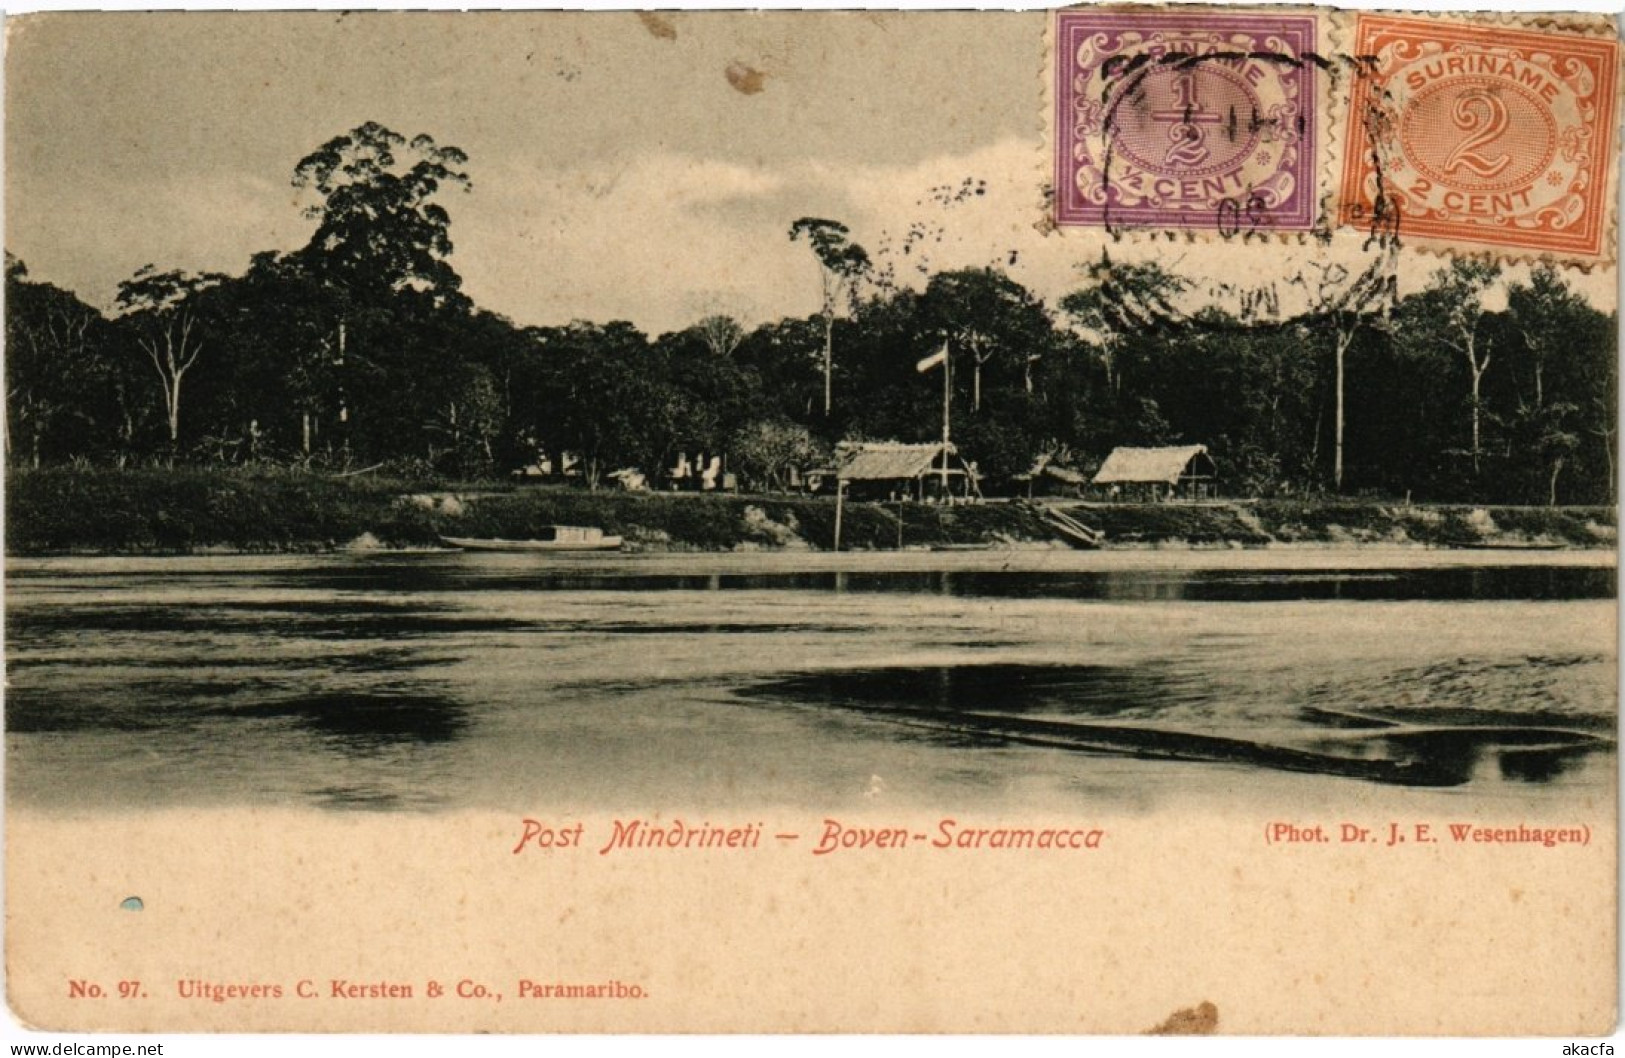 PC SURINAME POST MINDRINETI - BOVEN - SARAMACCA (a2397) - Surinam